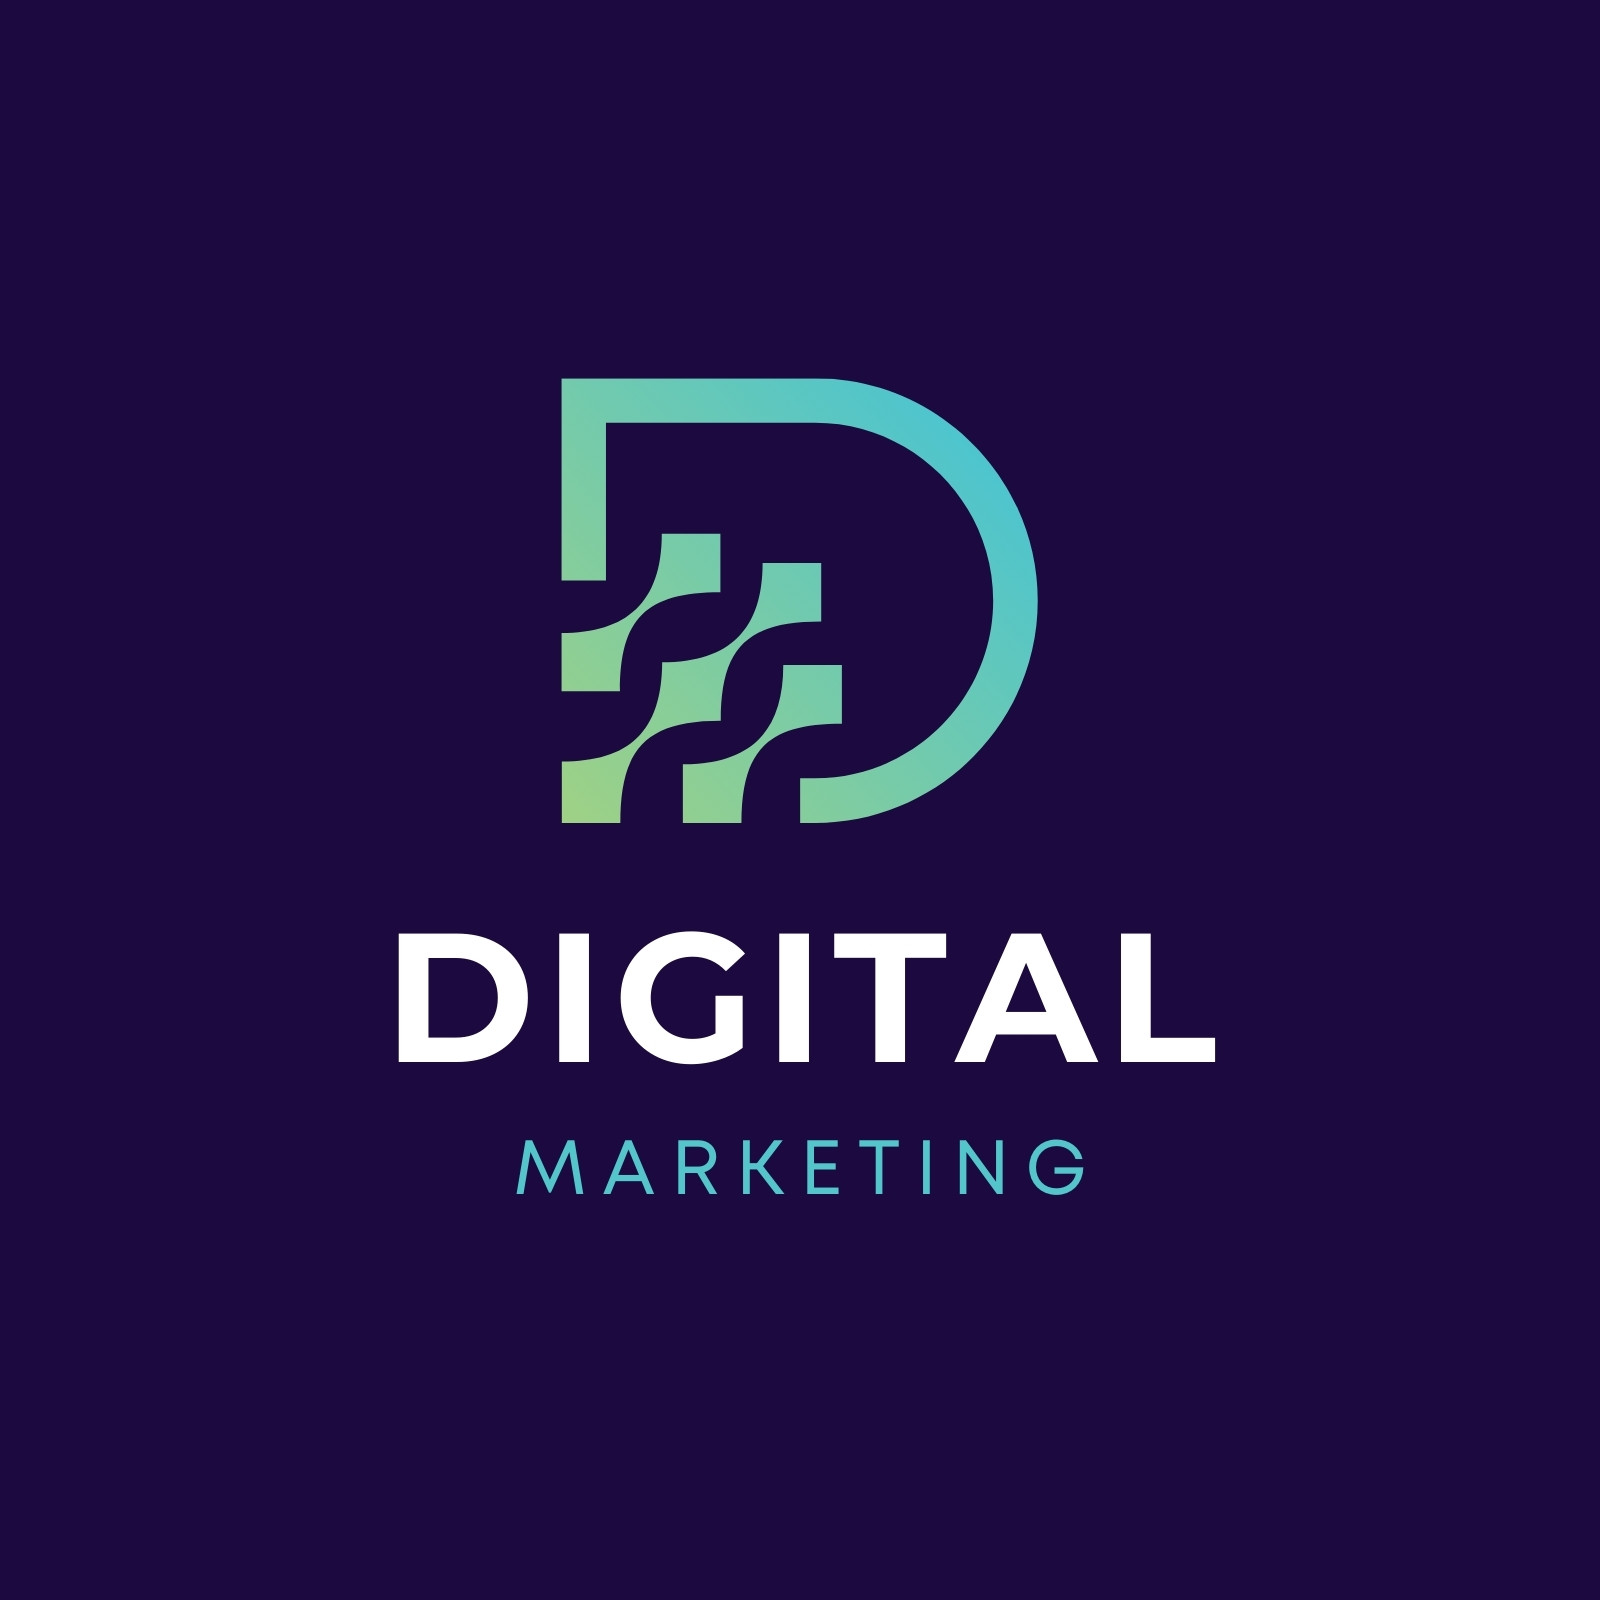 Top Digital Marketing Agency Logo Ideas For Designers